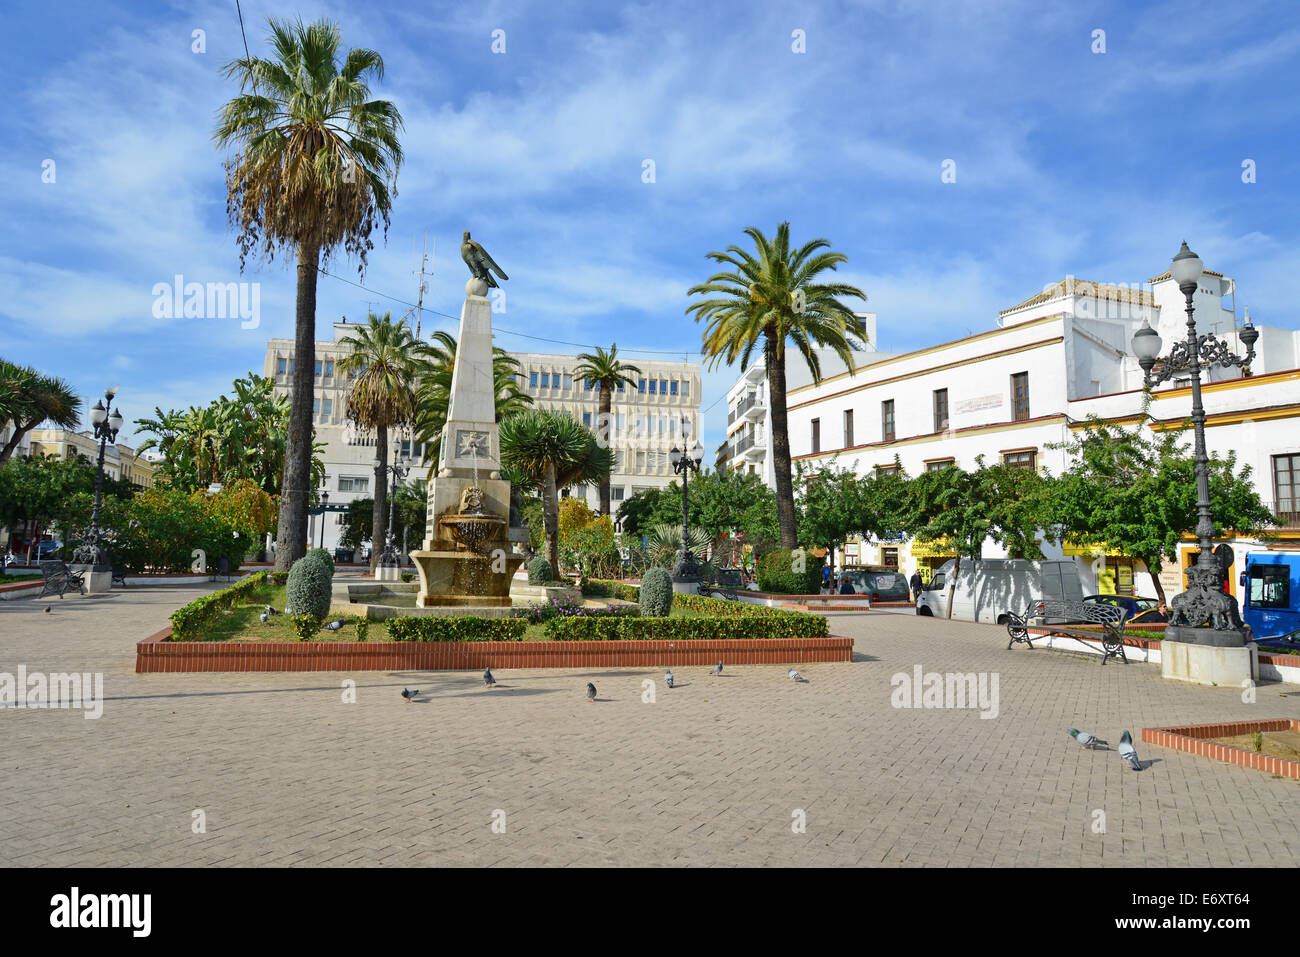 Plaza de las Angustias, Jerez de la Frontera, Province of Cádiz, Andalusia, Kingdom of Spain Stock Photo